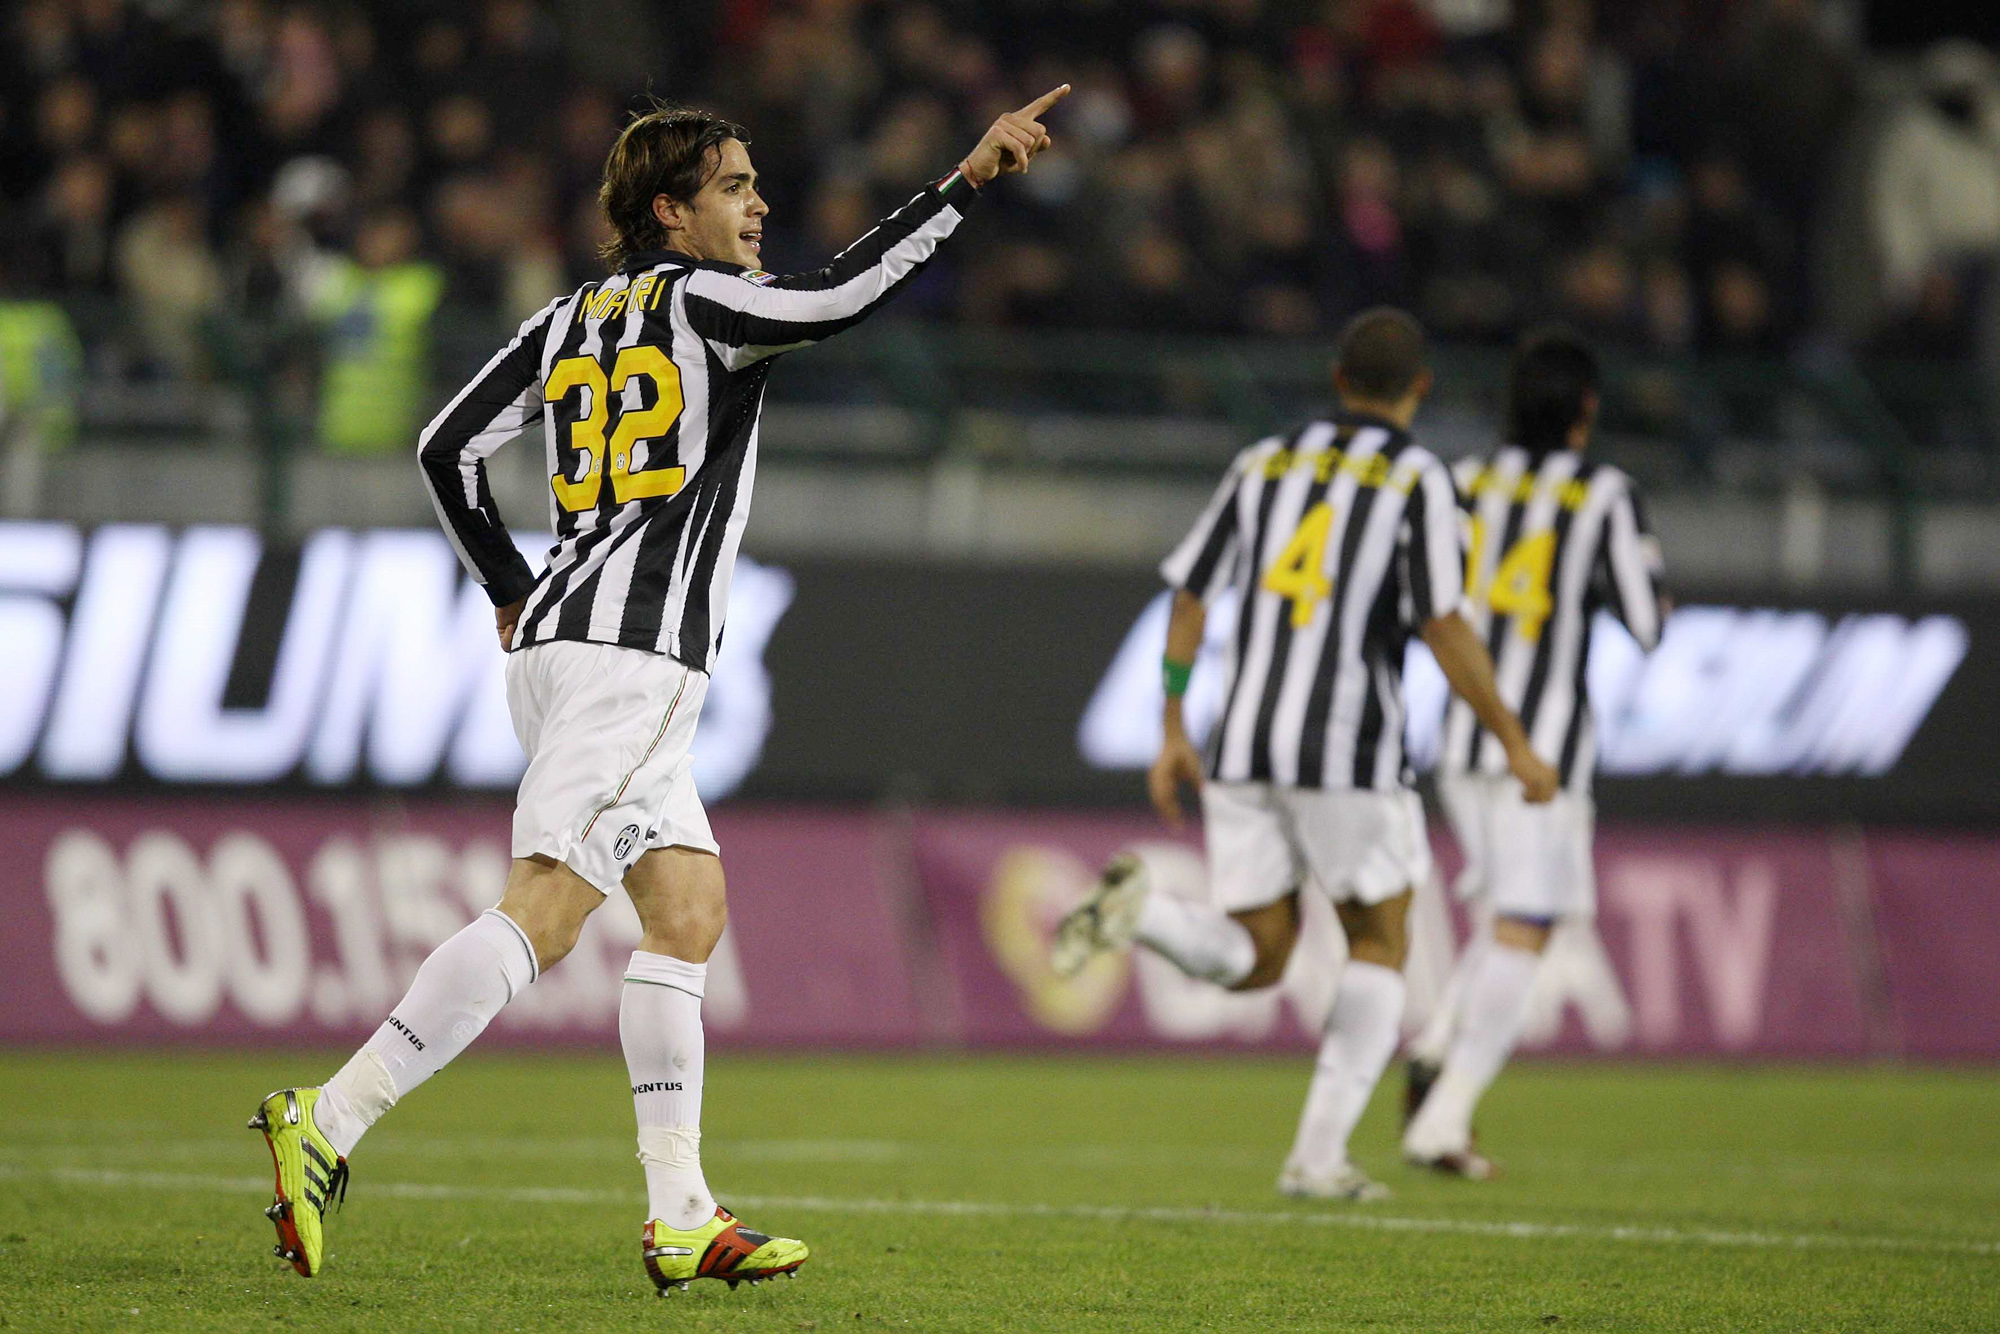 serie a, Inter, Samuel Etoo, Derby d italia, Maicon, Juventus